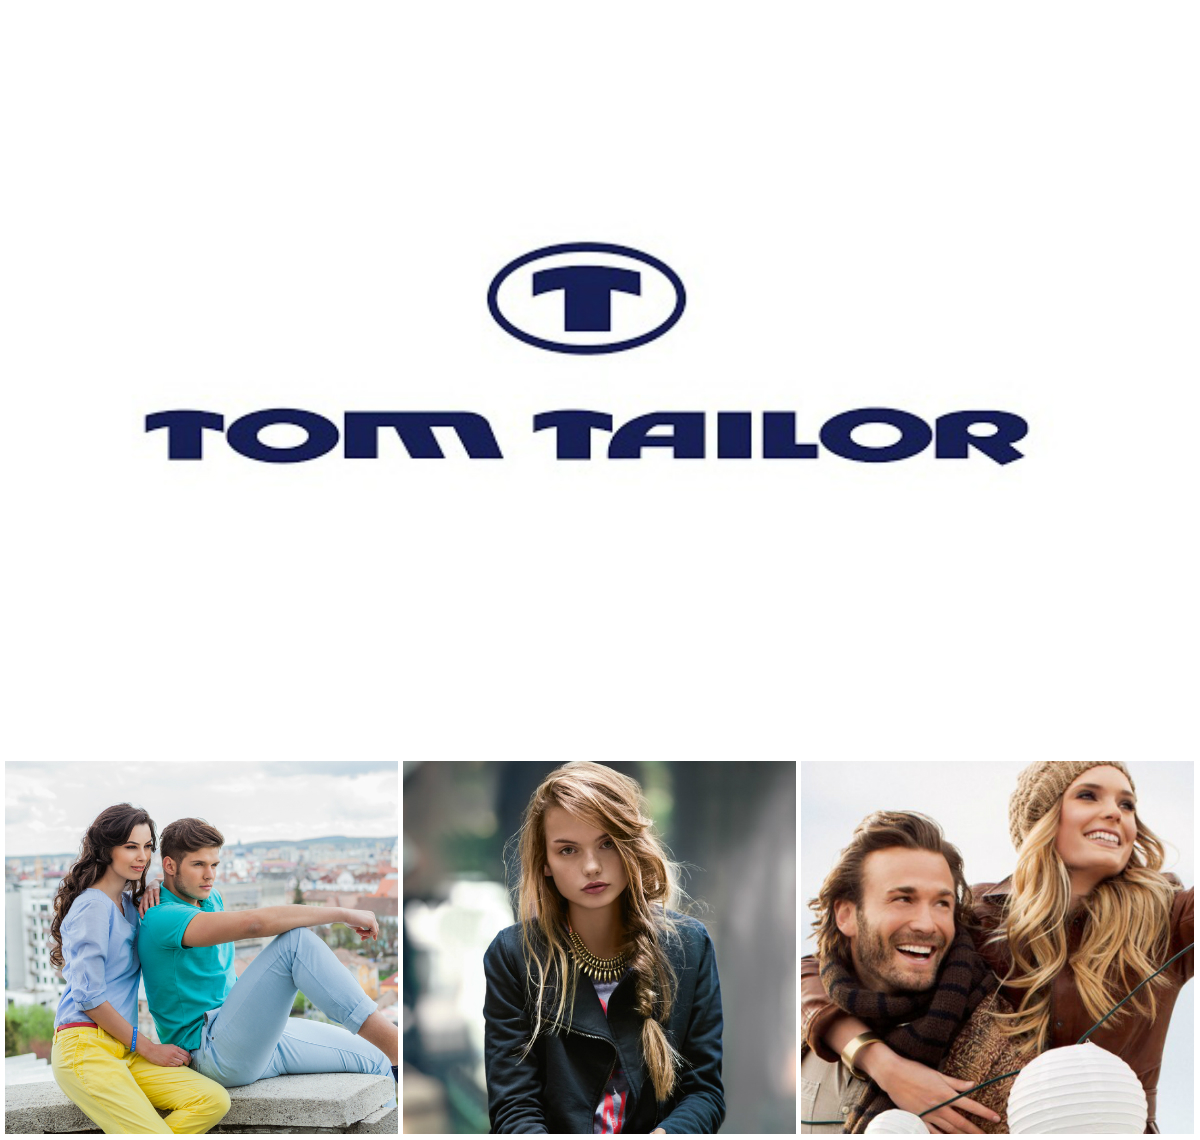 Том тейлор сайт интернет. Бренд одежды Tom Tailor. Tom Tailor логотип. Tom Tailor 957872.